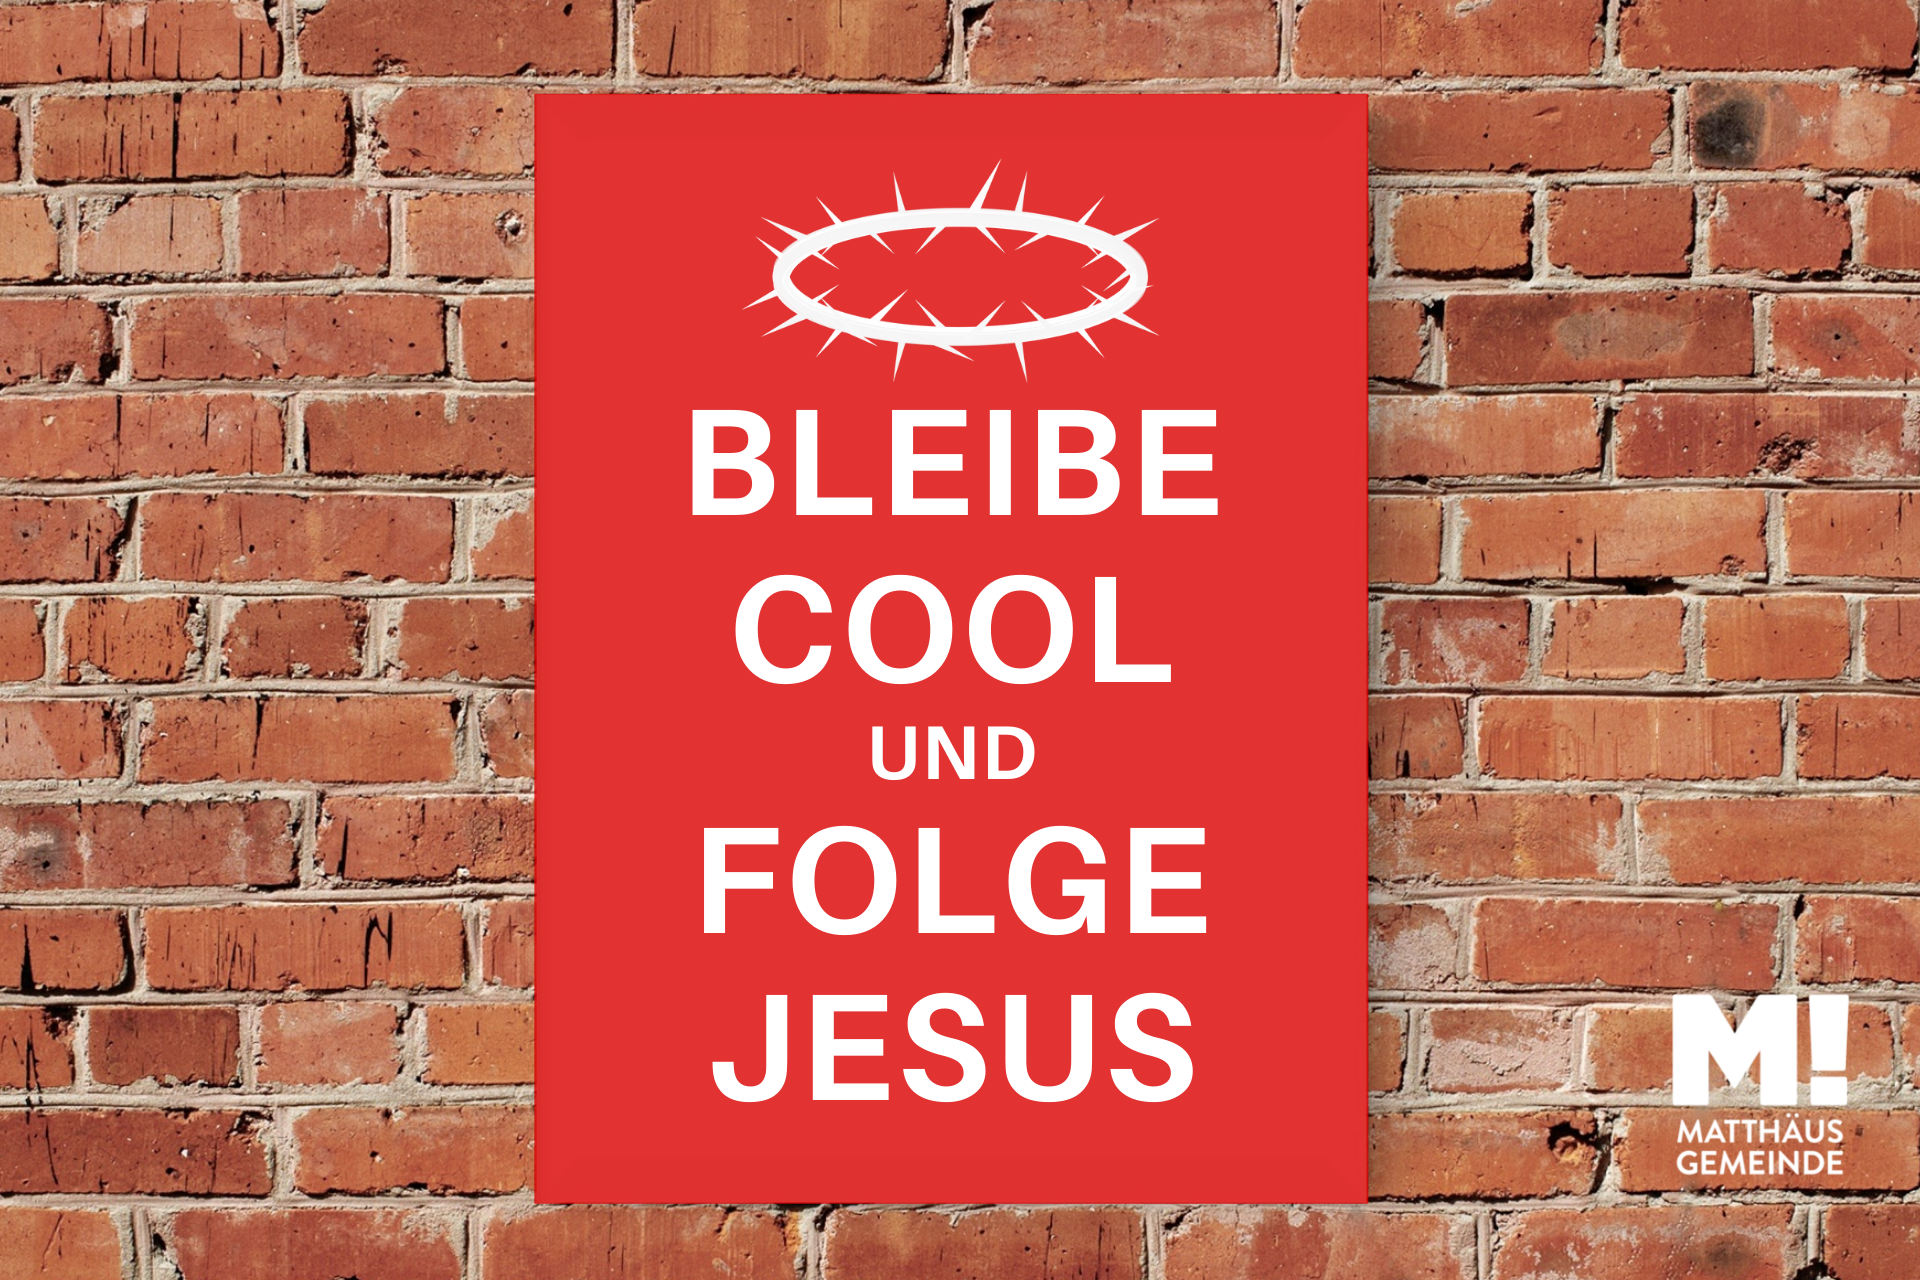 Bleibe cool und folge Jesus